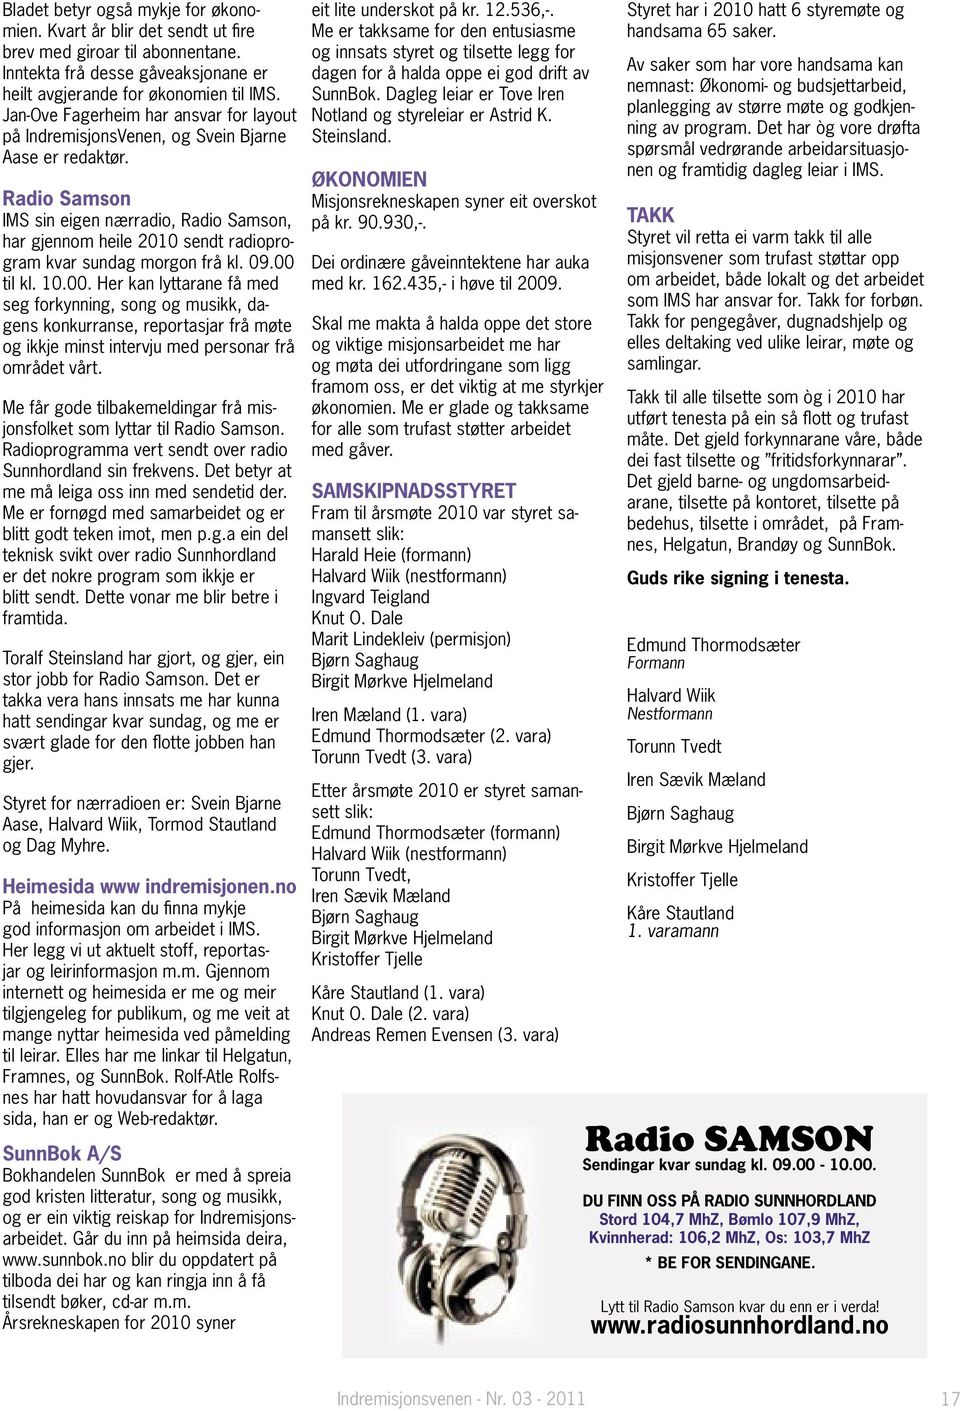 Radio Samson IMS sin eigen nærradio, Radio Samson, har gjennom heile 2010 sendt radioprogram kvar sundag morgon frå kl. 09.00 